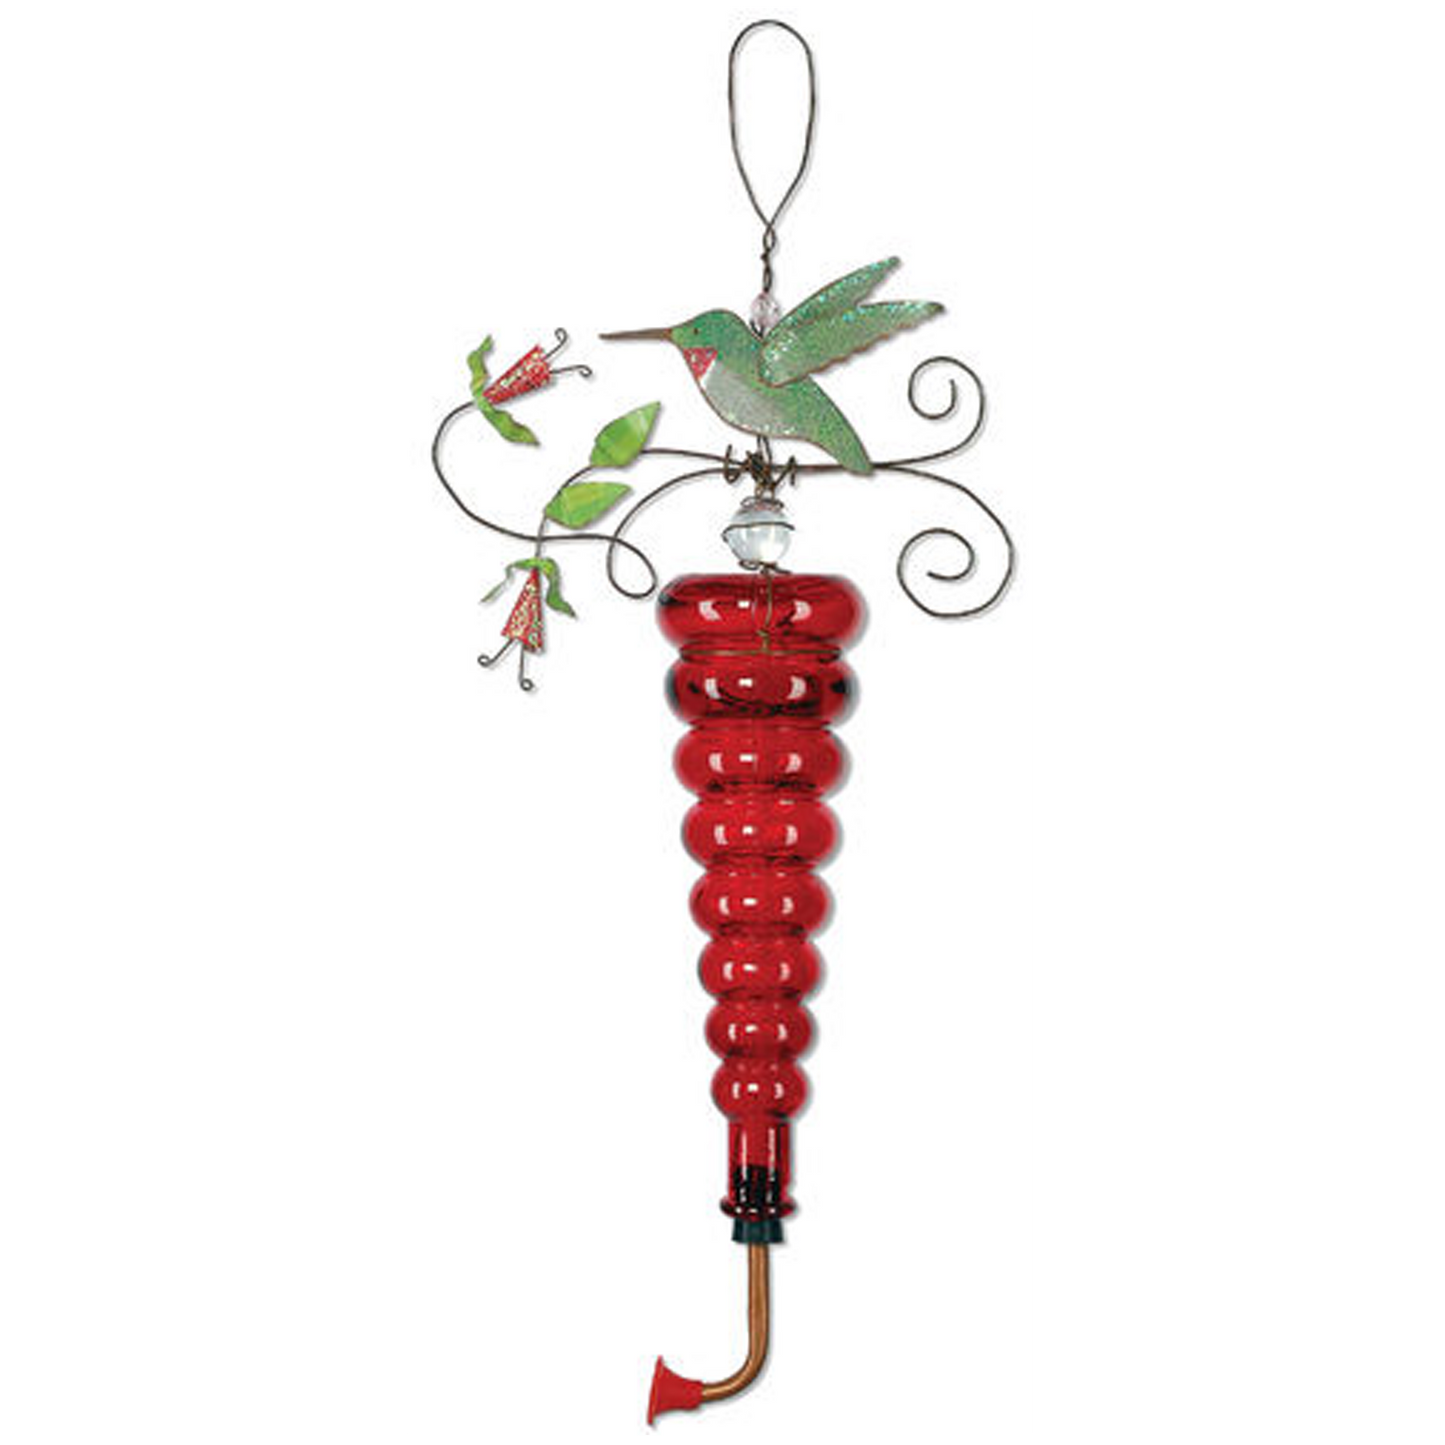 Fire Sale! Enchanted Garden Collection Hummingbird Feeder Humming Birds Glass Nectar Feeders - Red